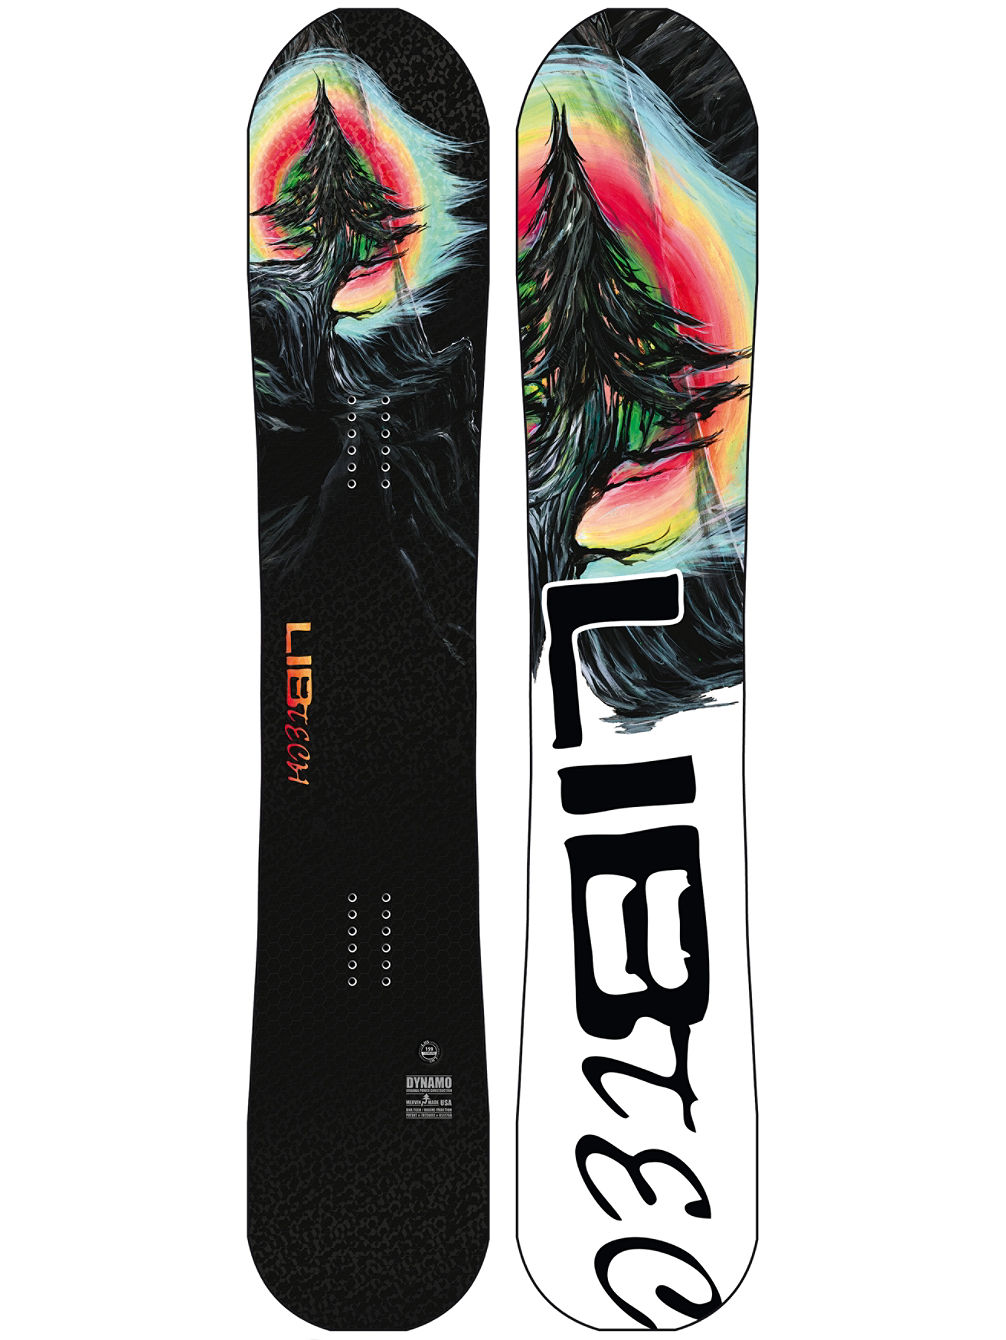 Dynamo C3 162 2020 Snowboard